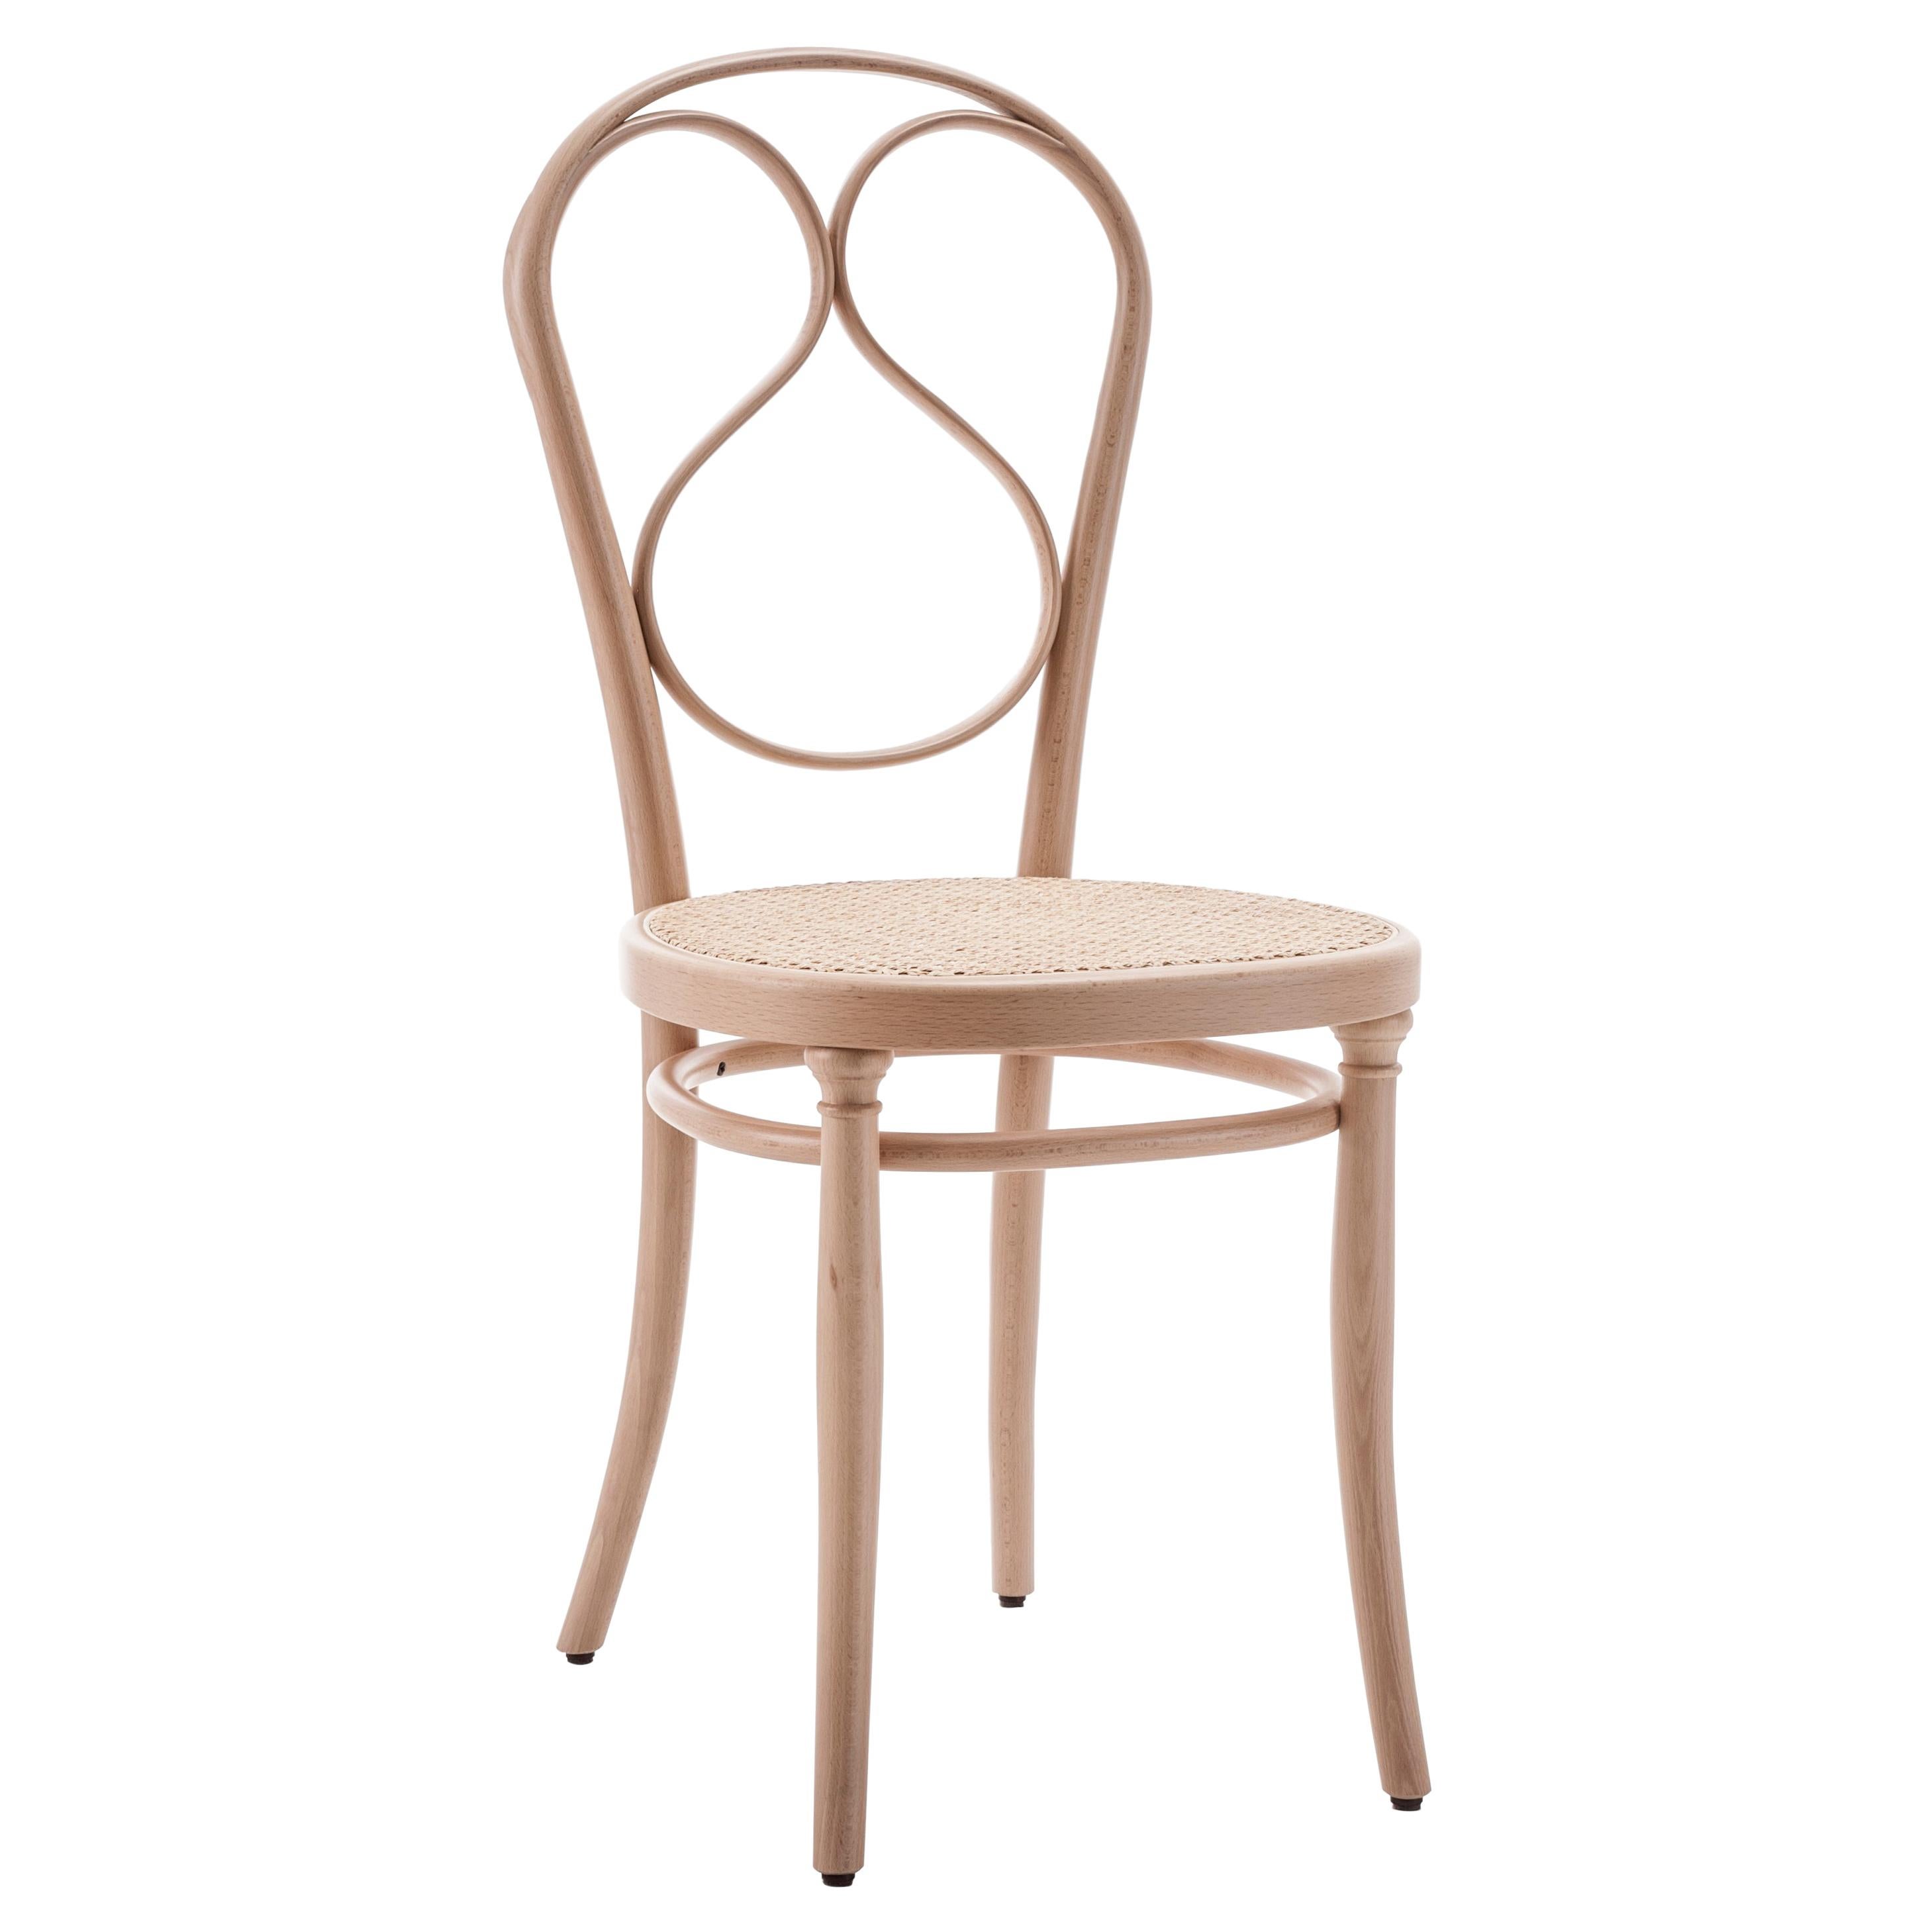 Gebrüder Thonet Vienna GmbH N.1 Chair in Beechwood with Cane Seat